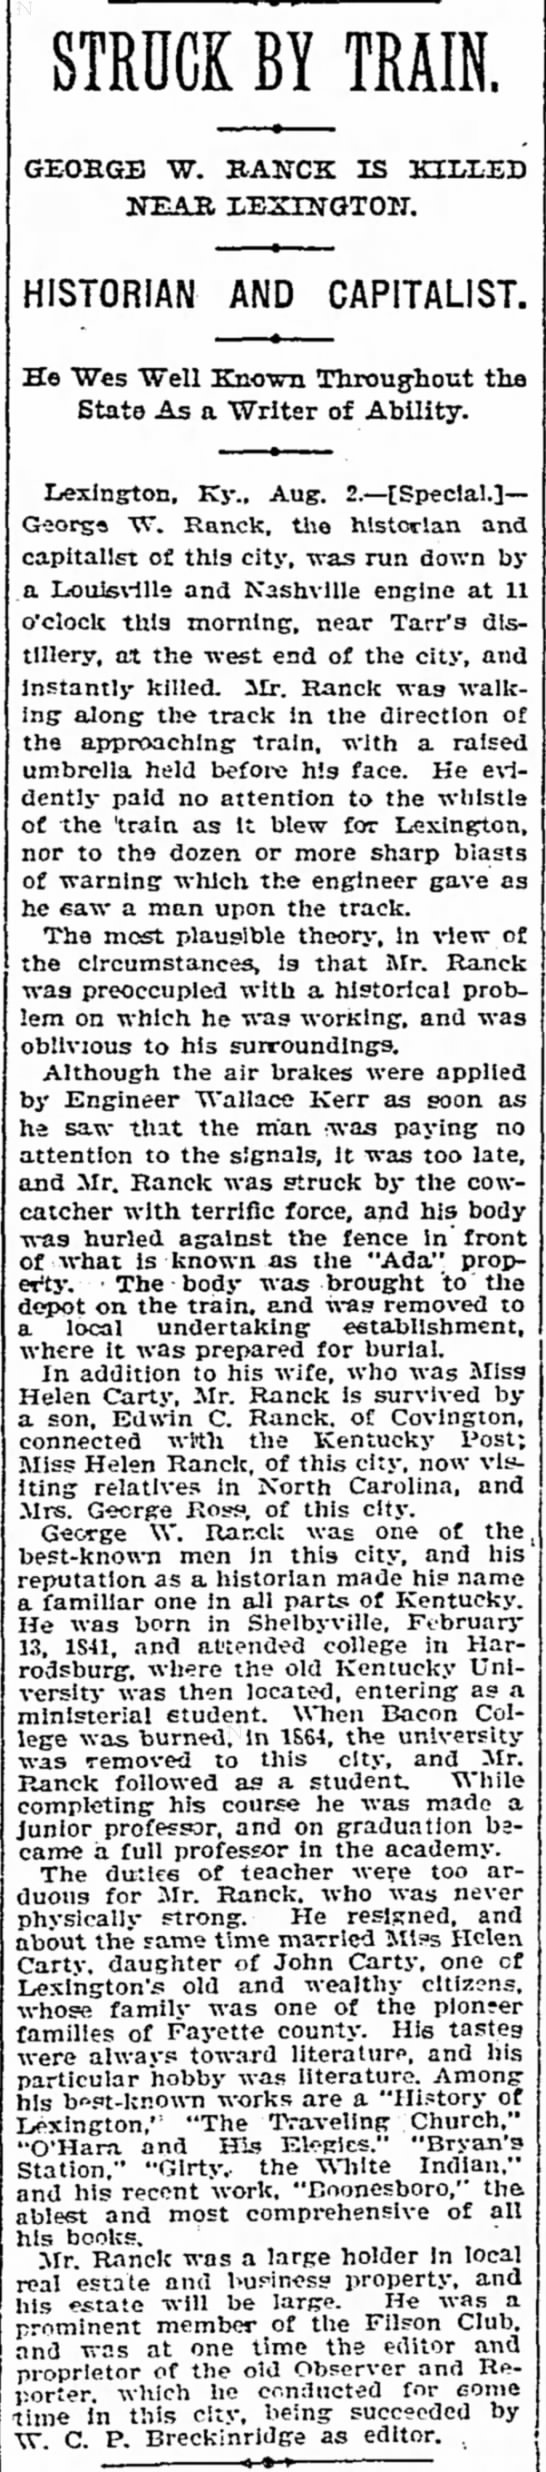 George W. Ranck struck by train 1901 - 